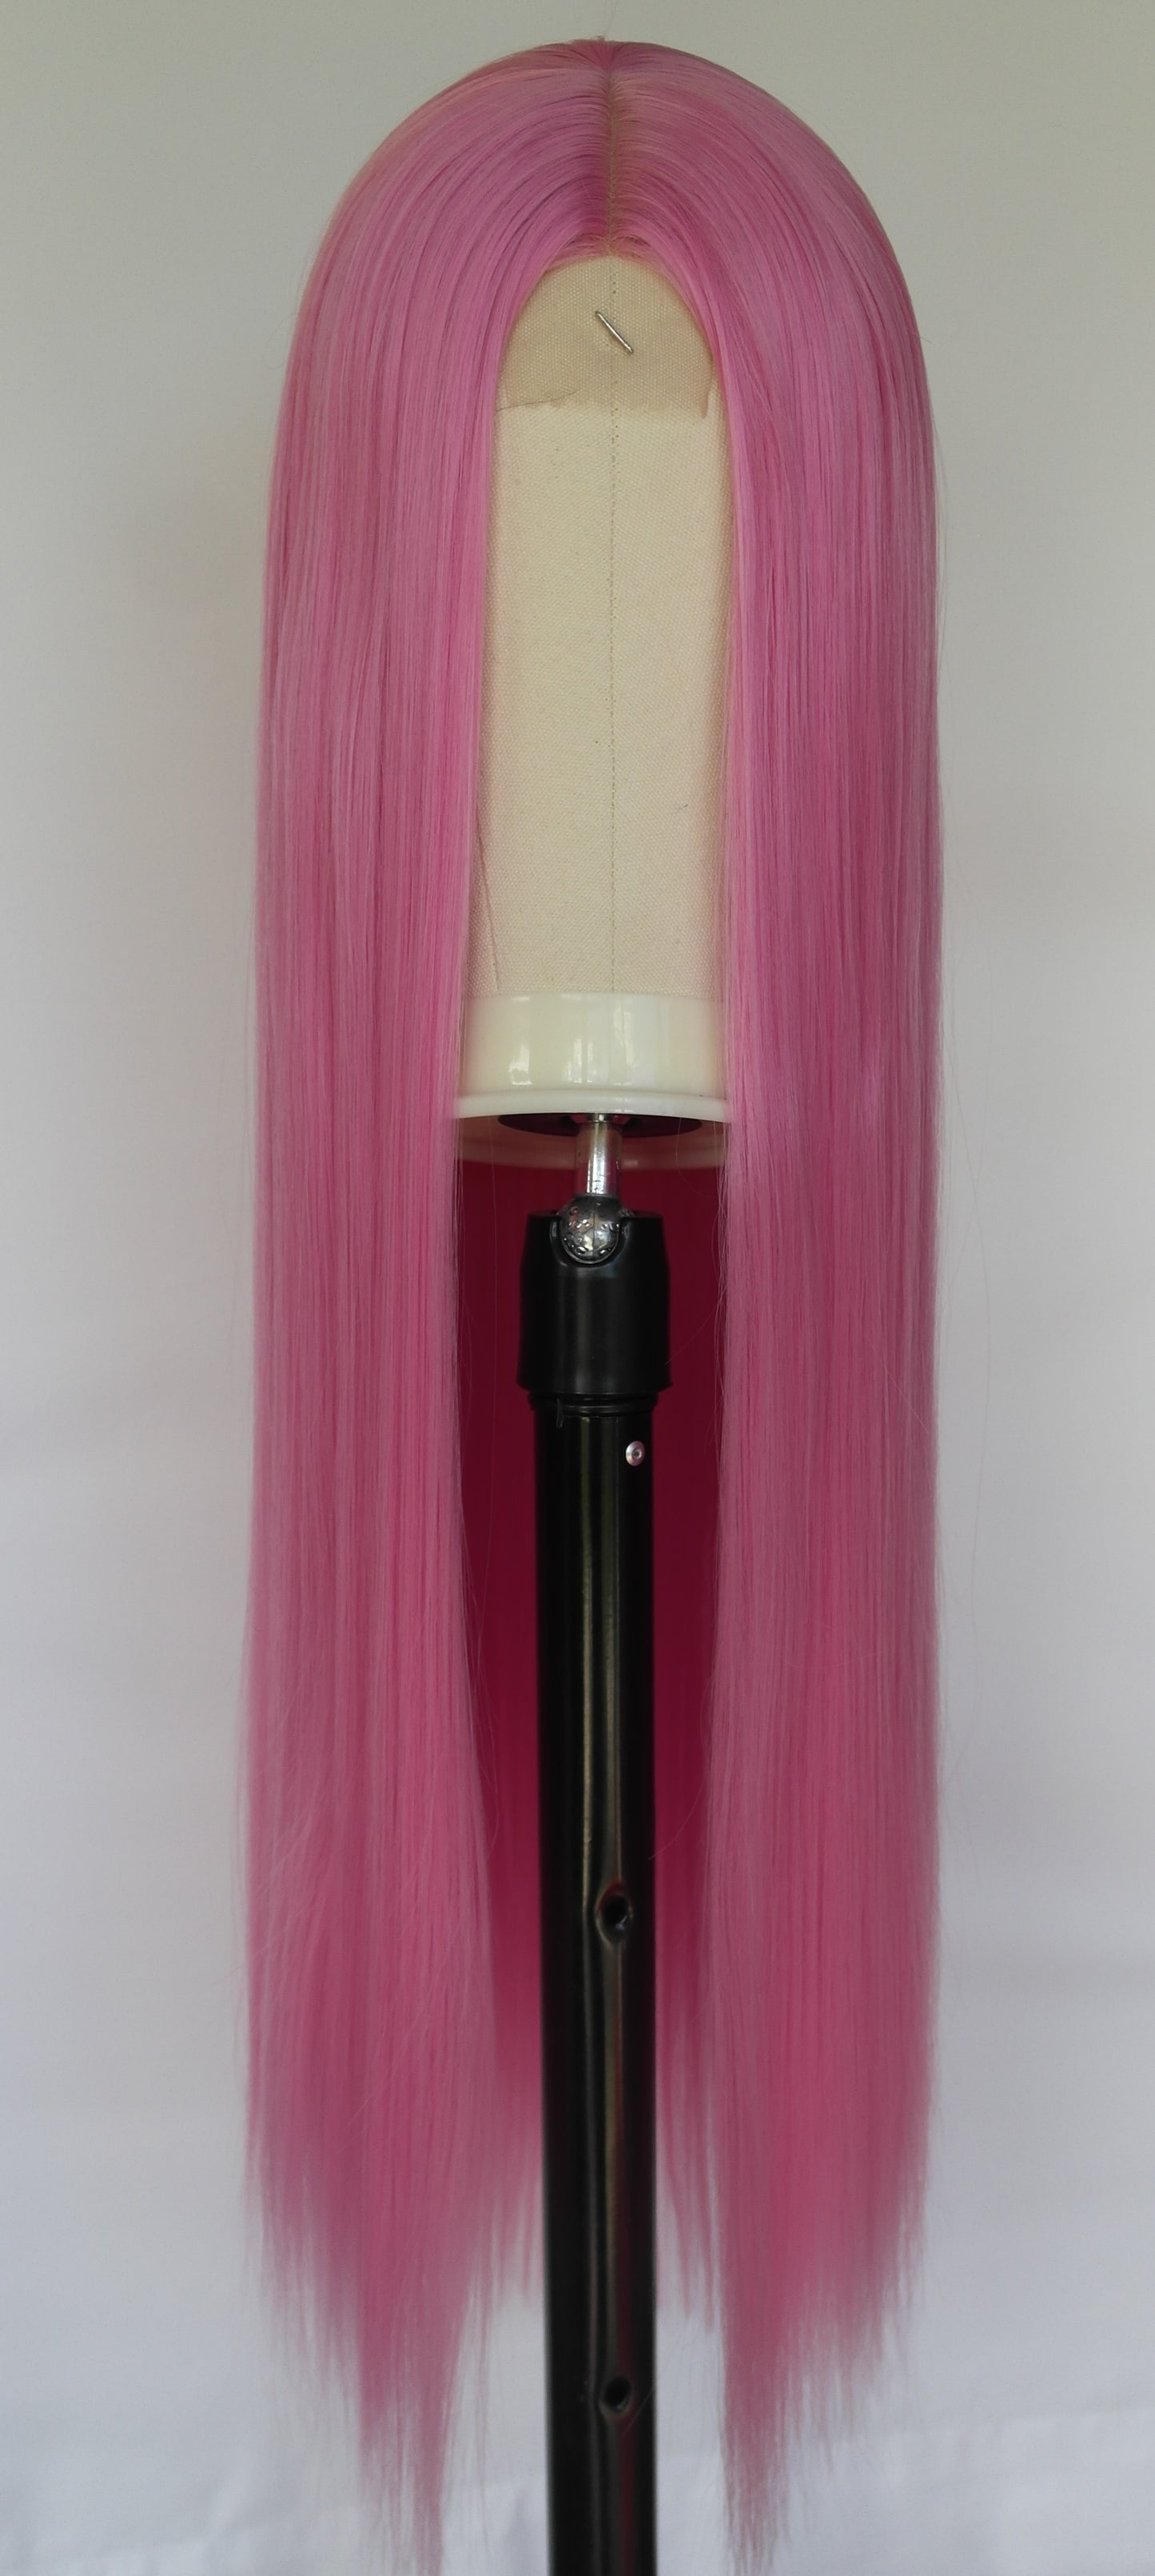 Bubblegum Pink Lace Center Wig